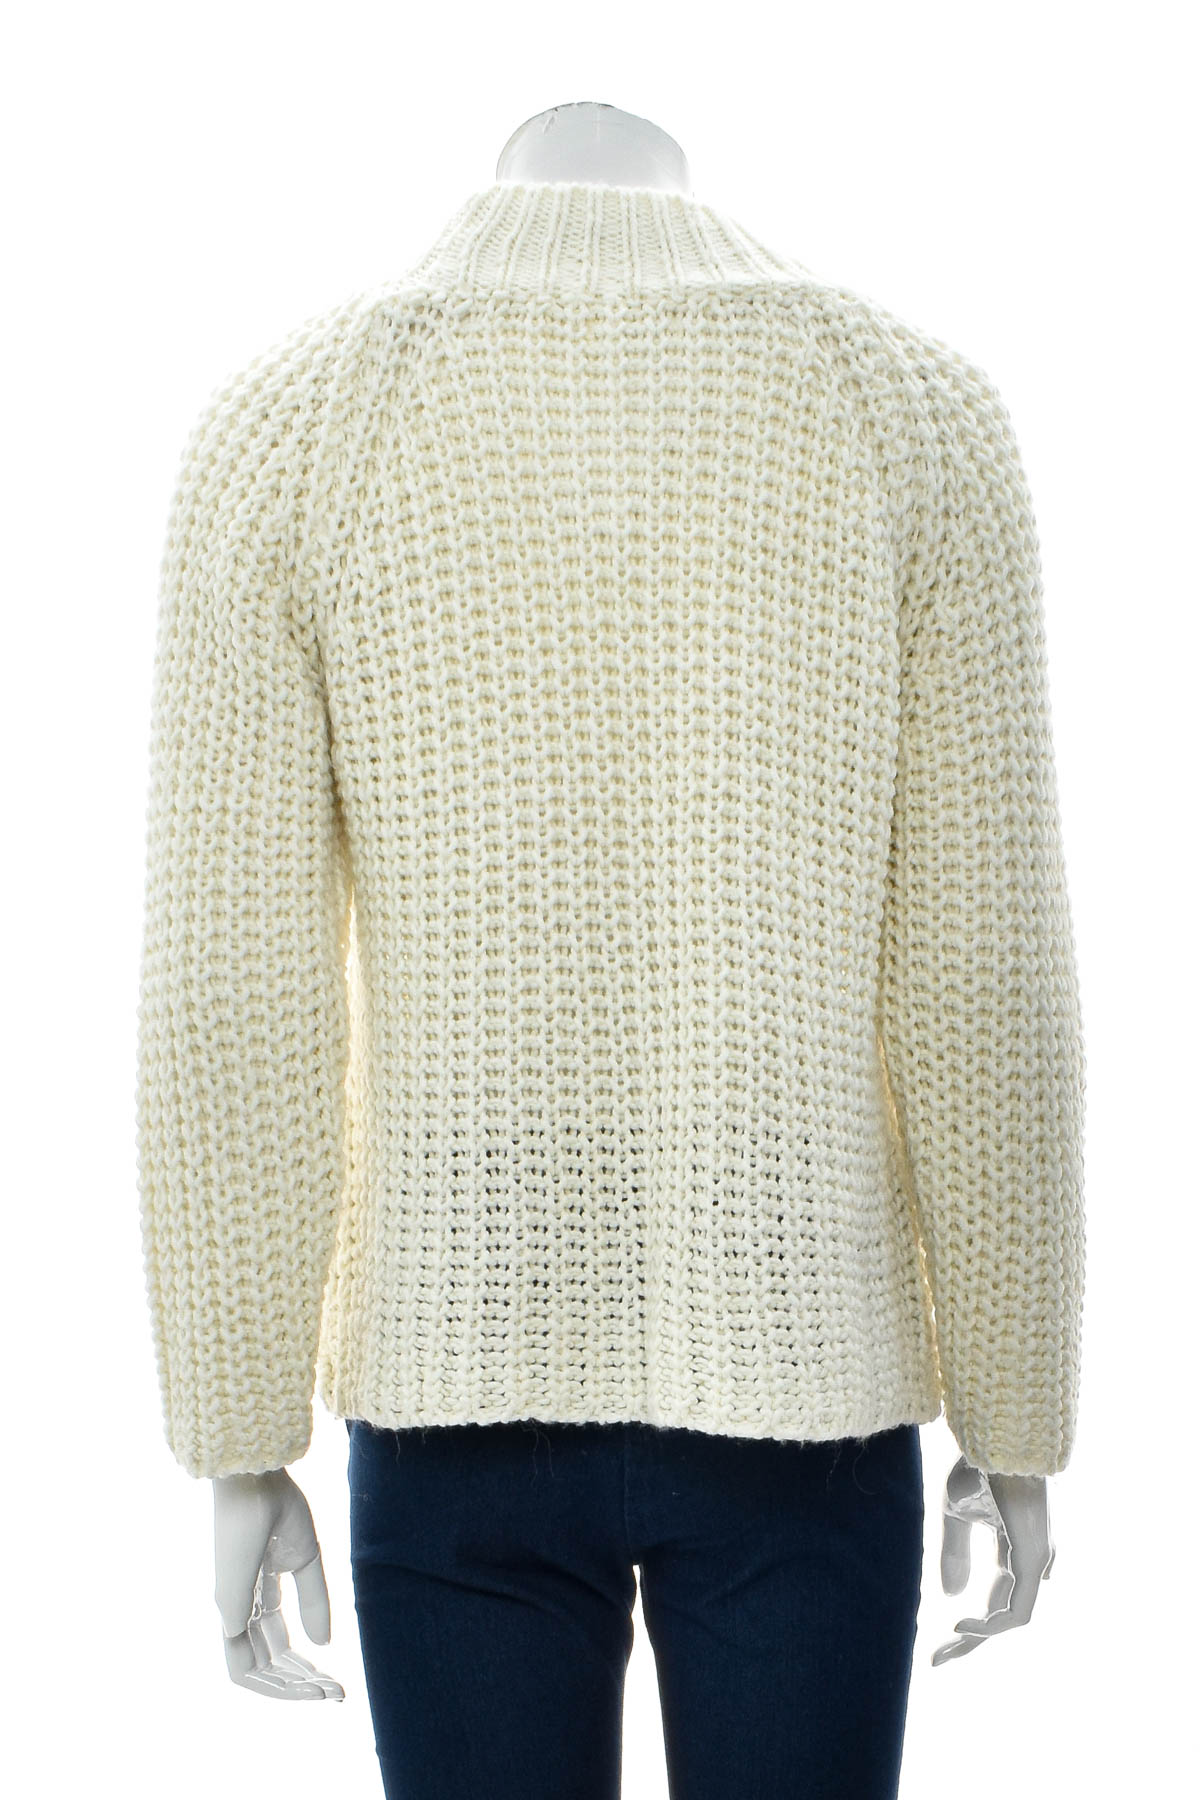 Women's sweater - KimiKa - 1